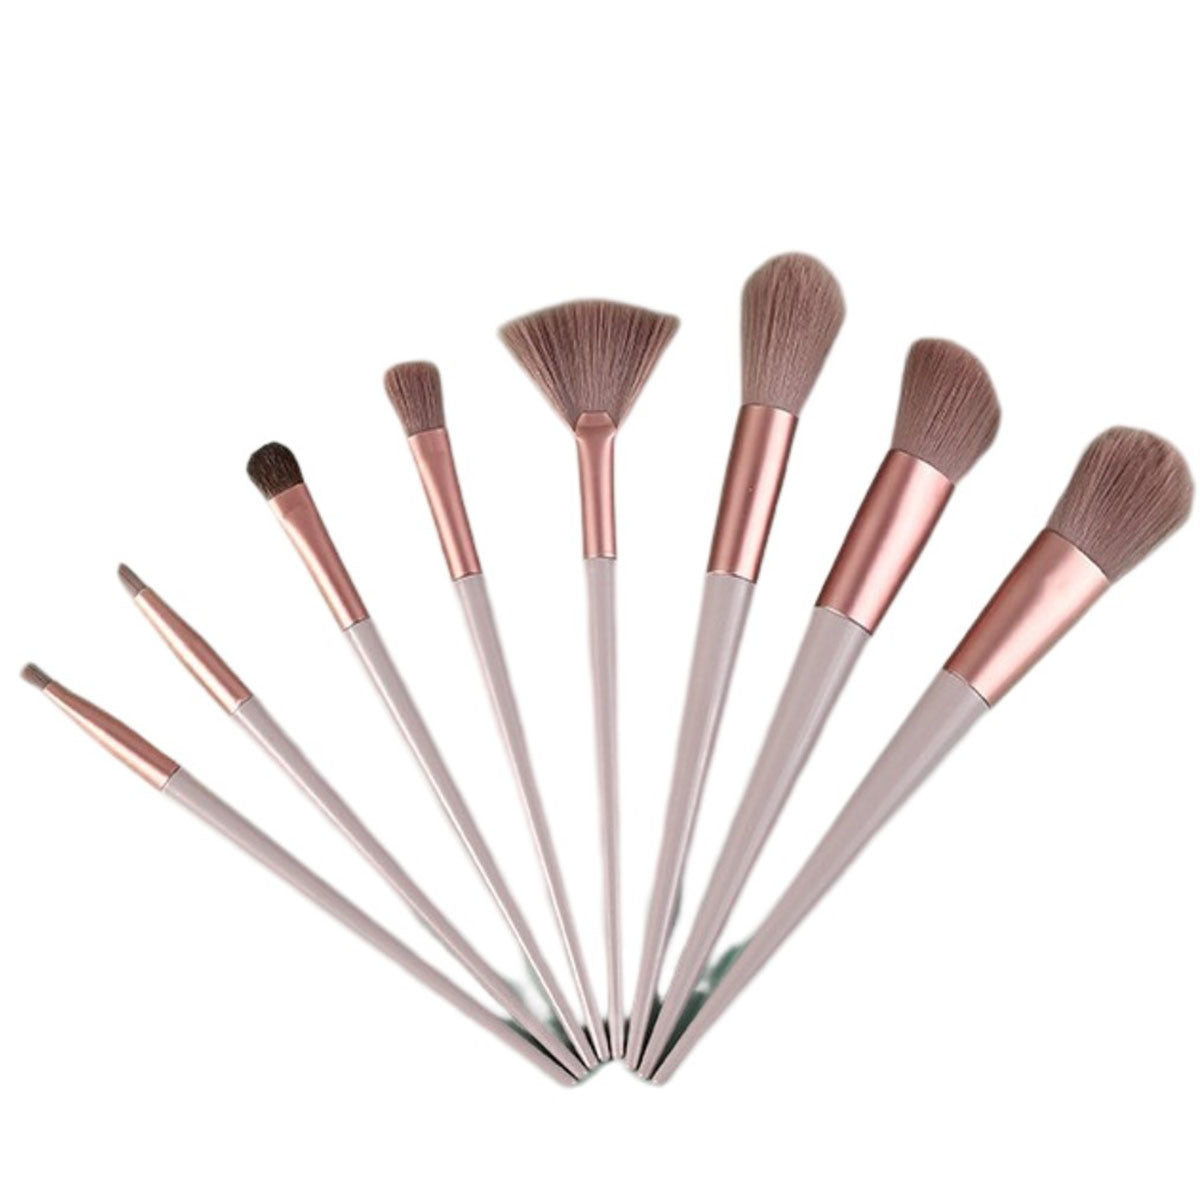 Set of 8 Makeup Brushes